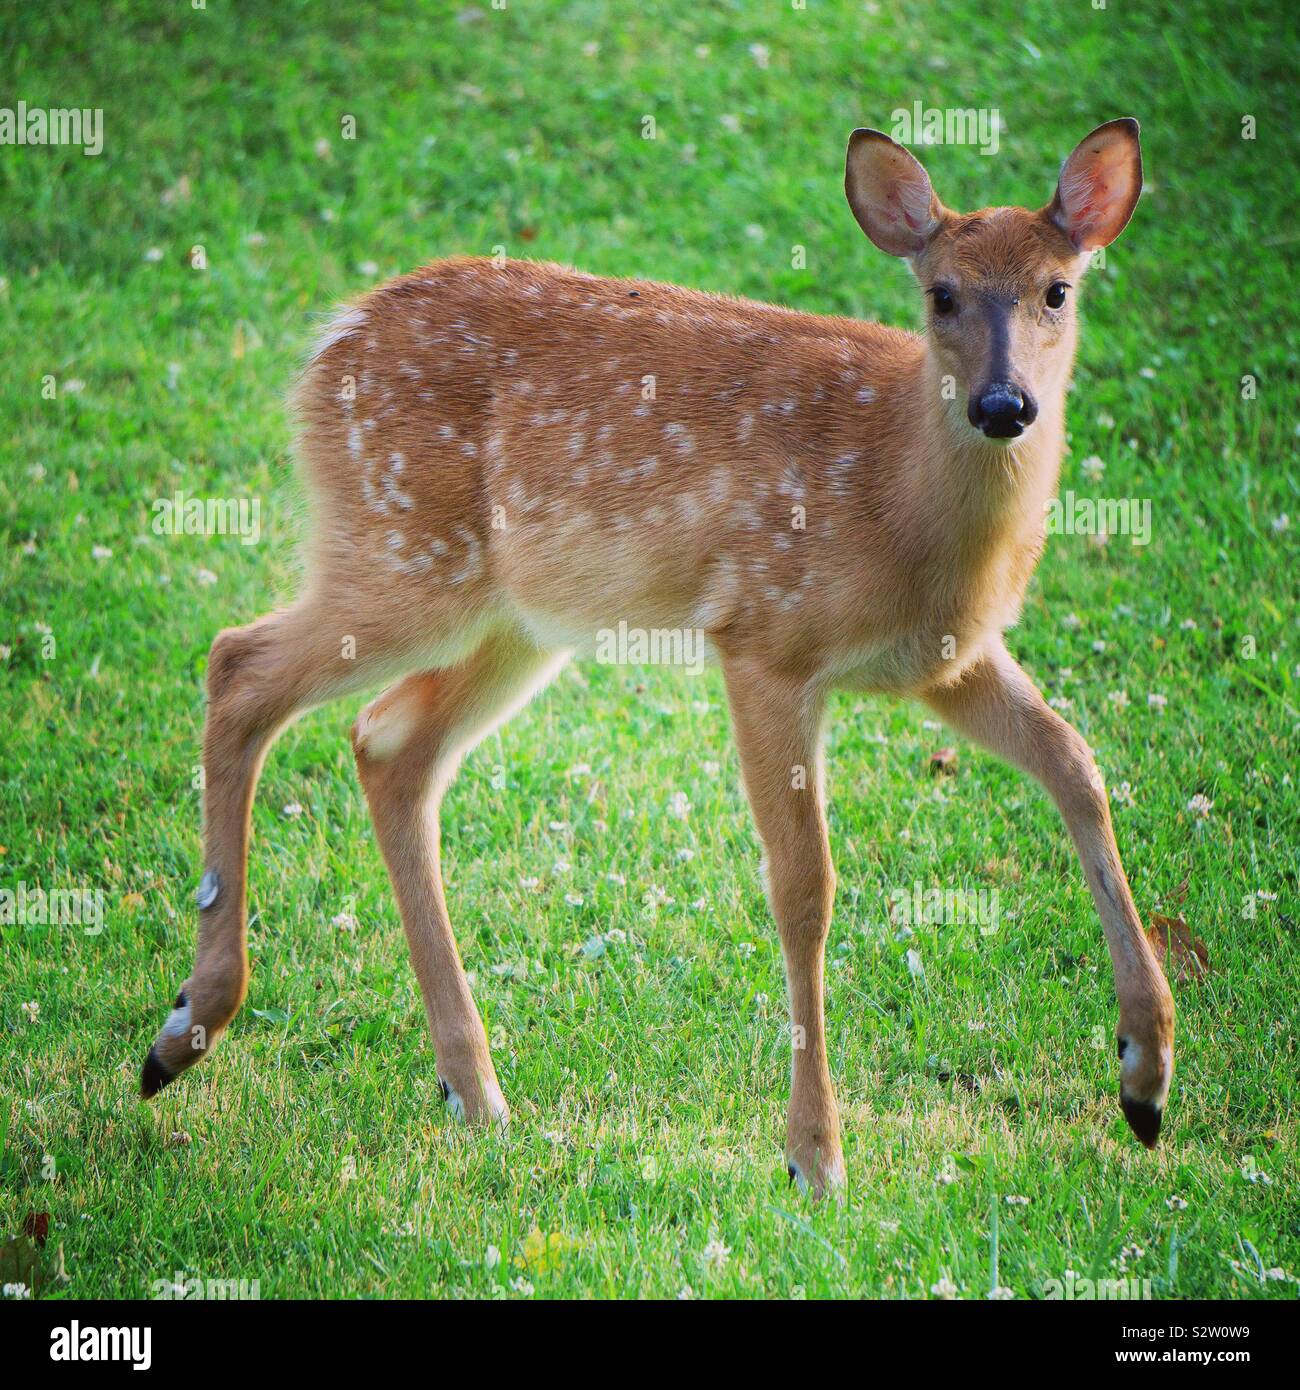 Baby White tailed deer Stockfoto